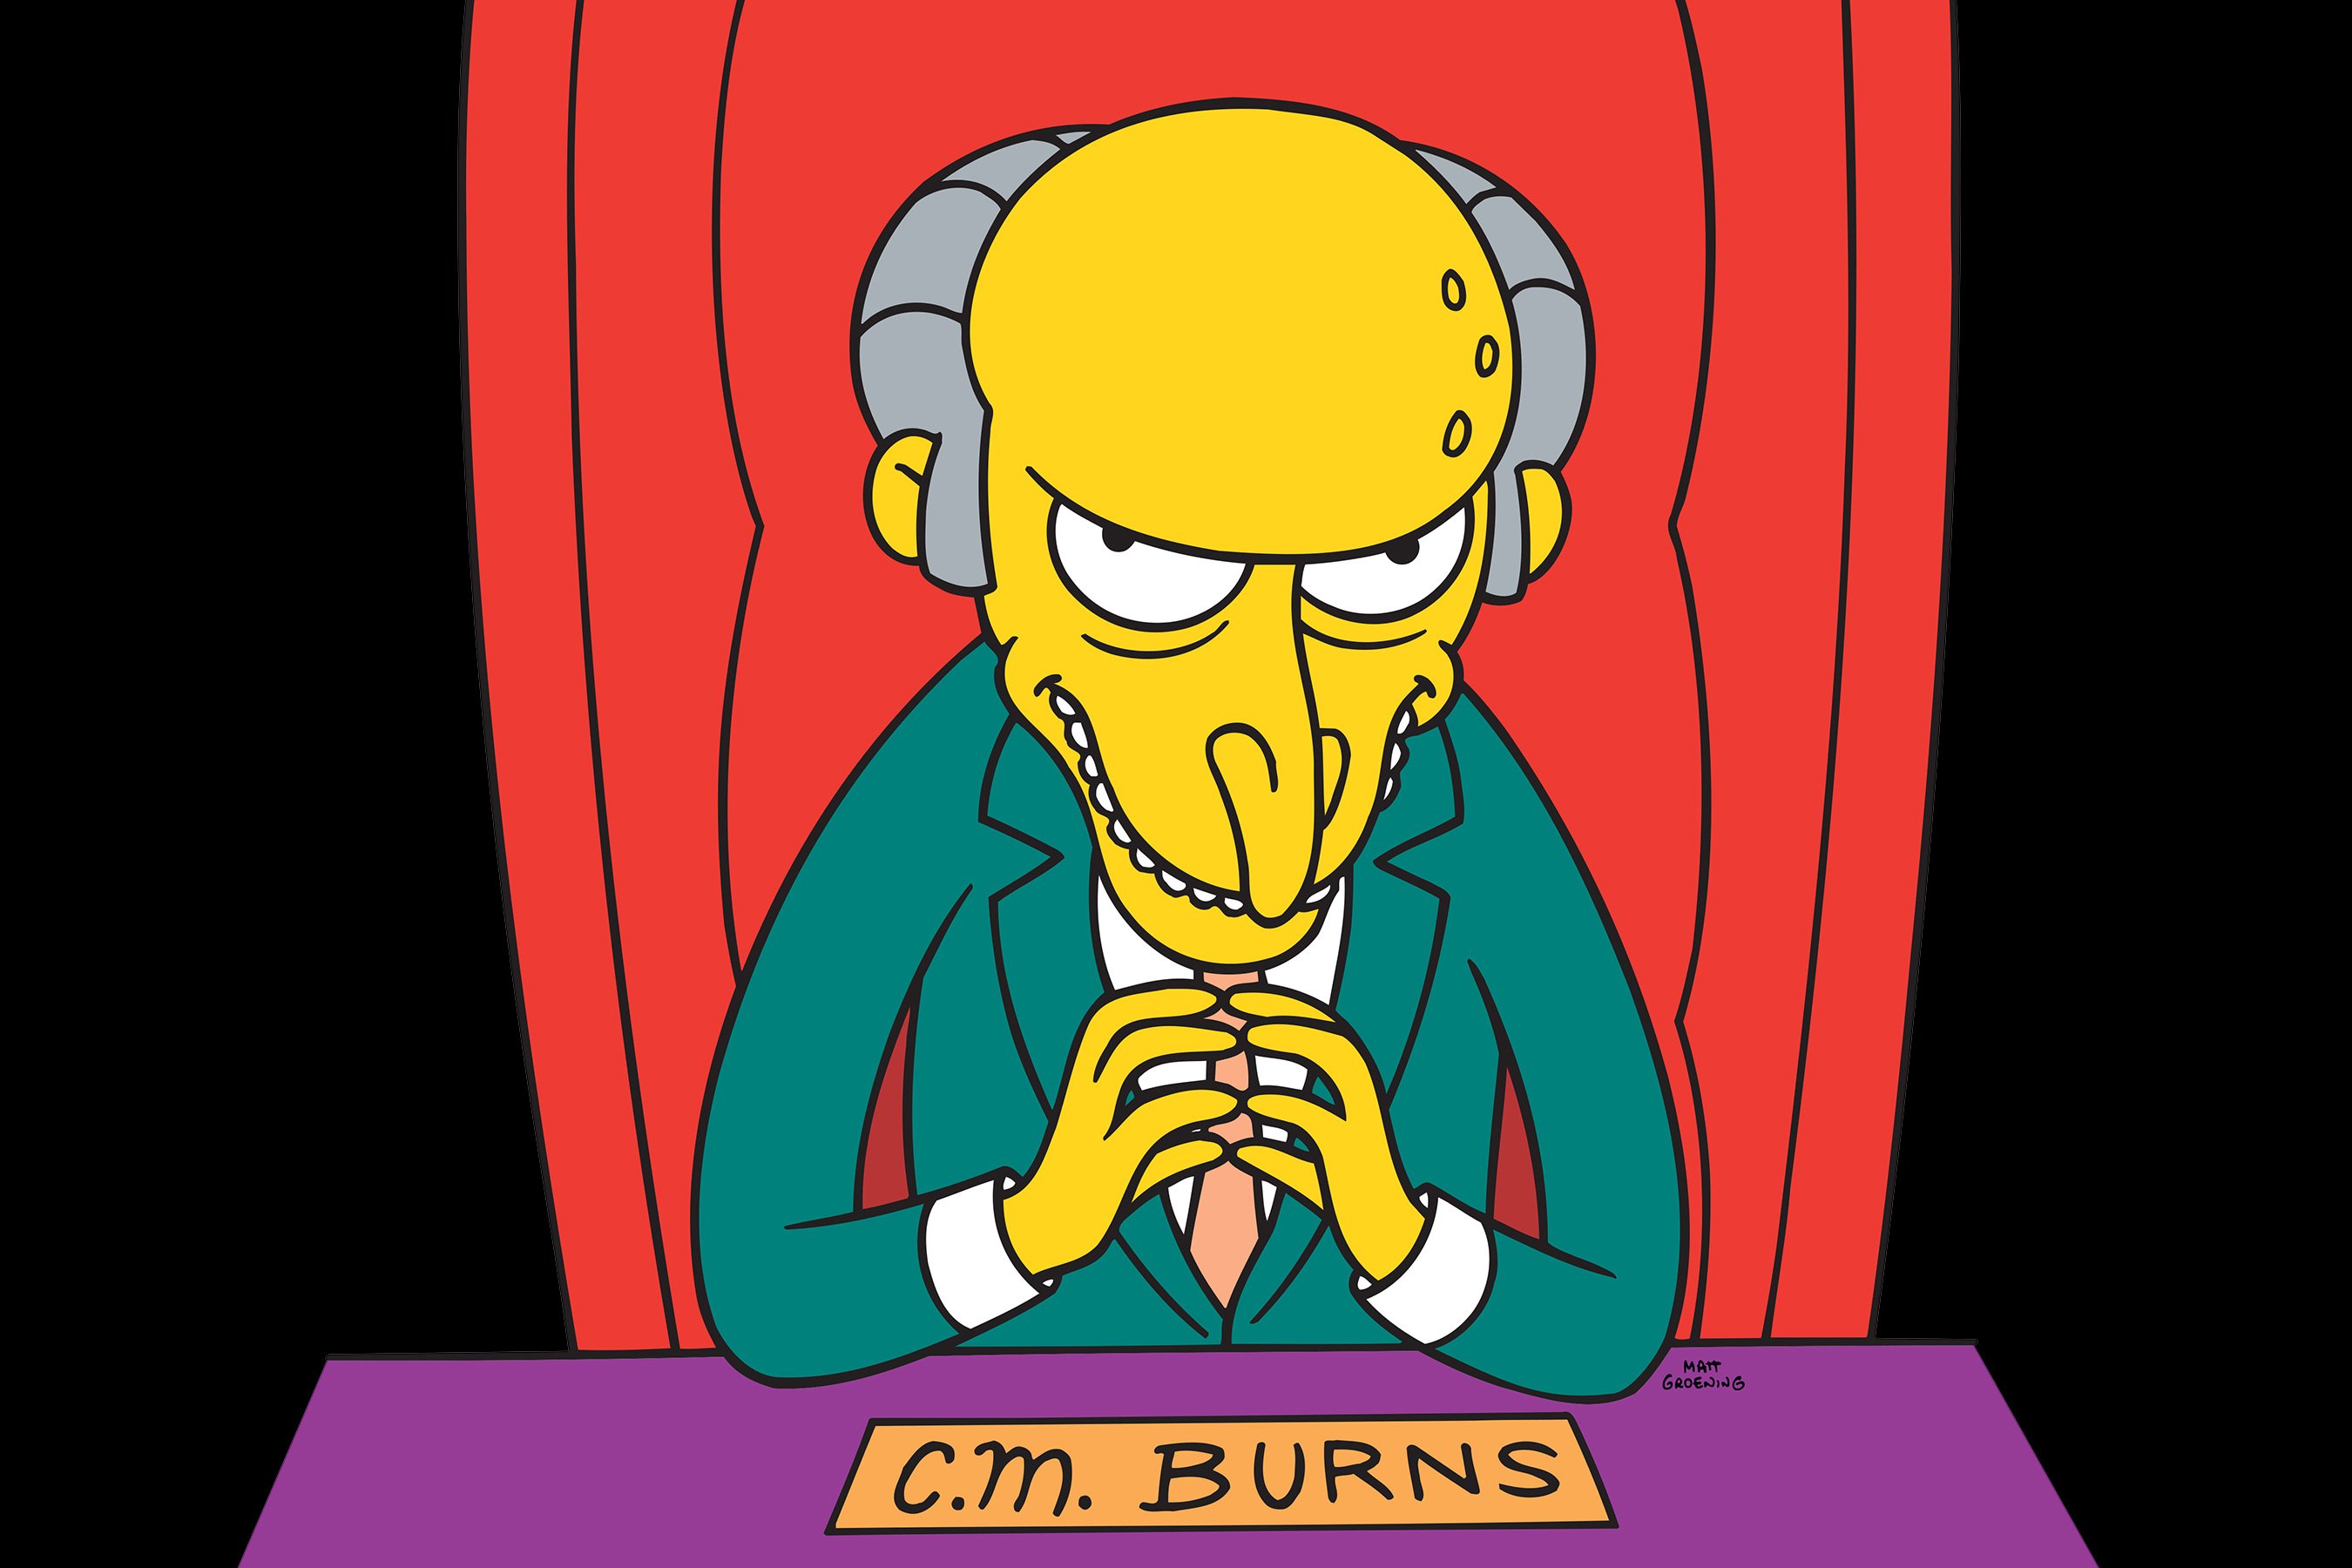 1. Mr. Burns - The Simpsons.